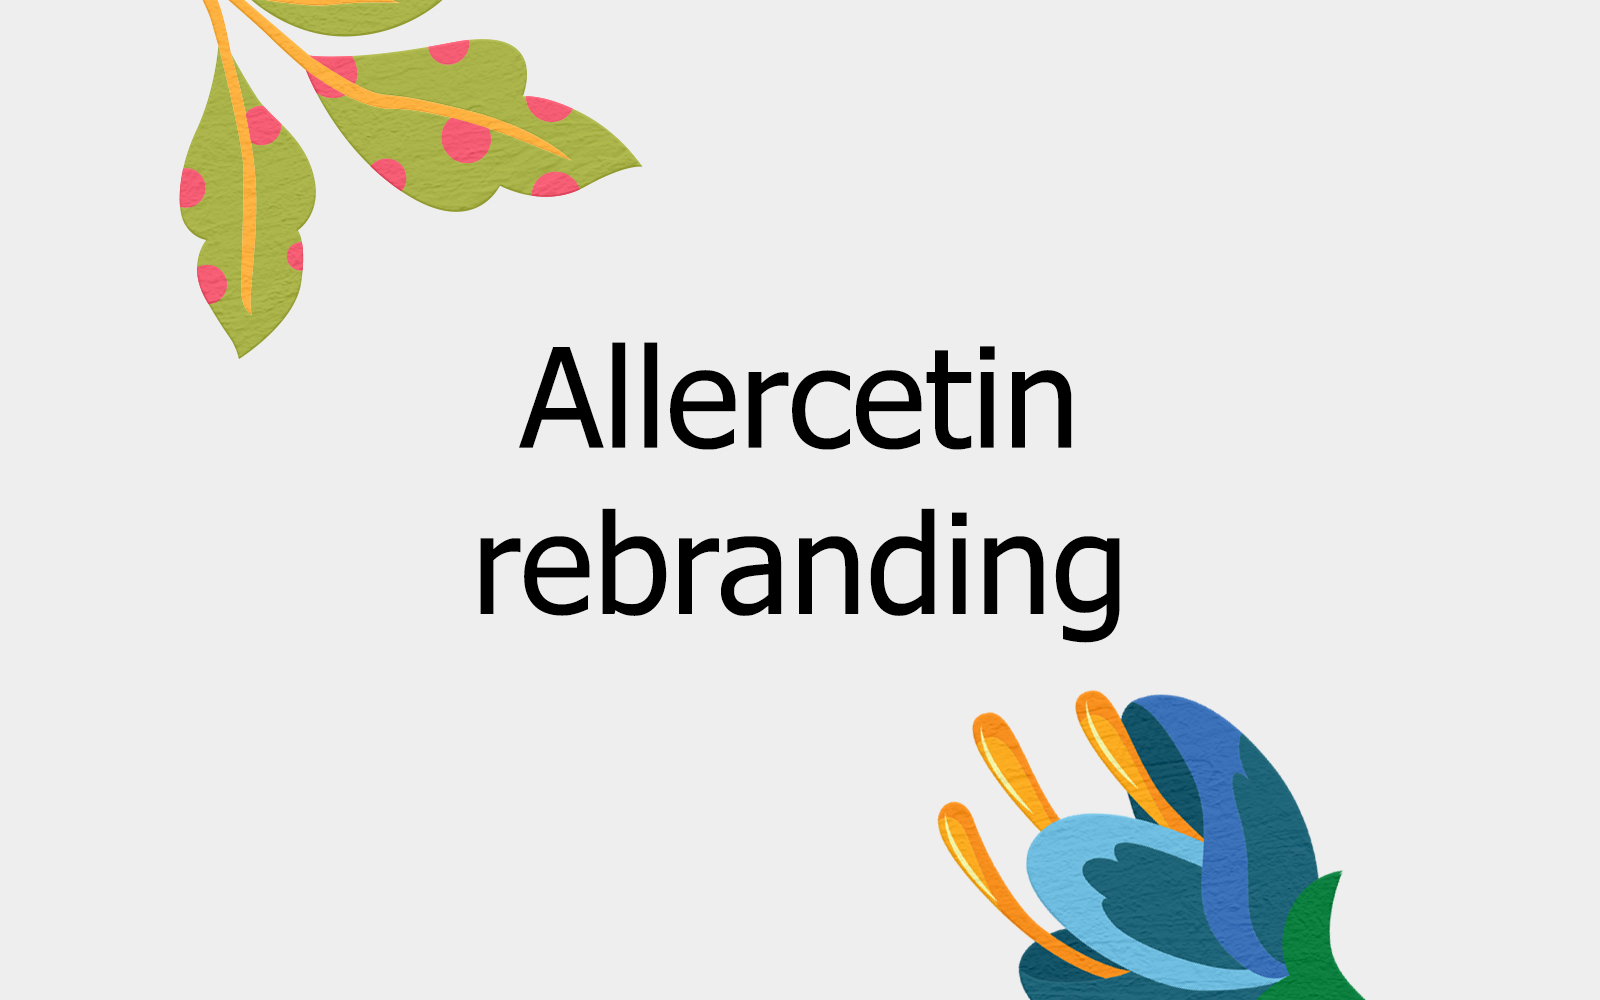 Allercetin rebranding